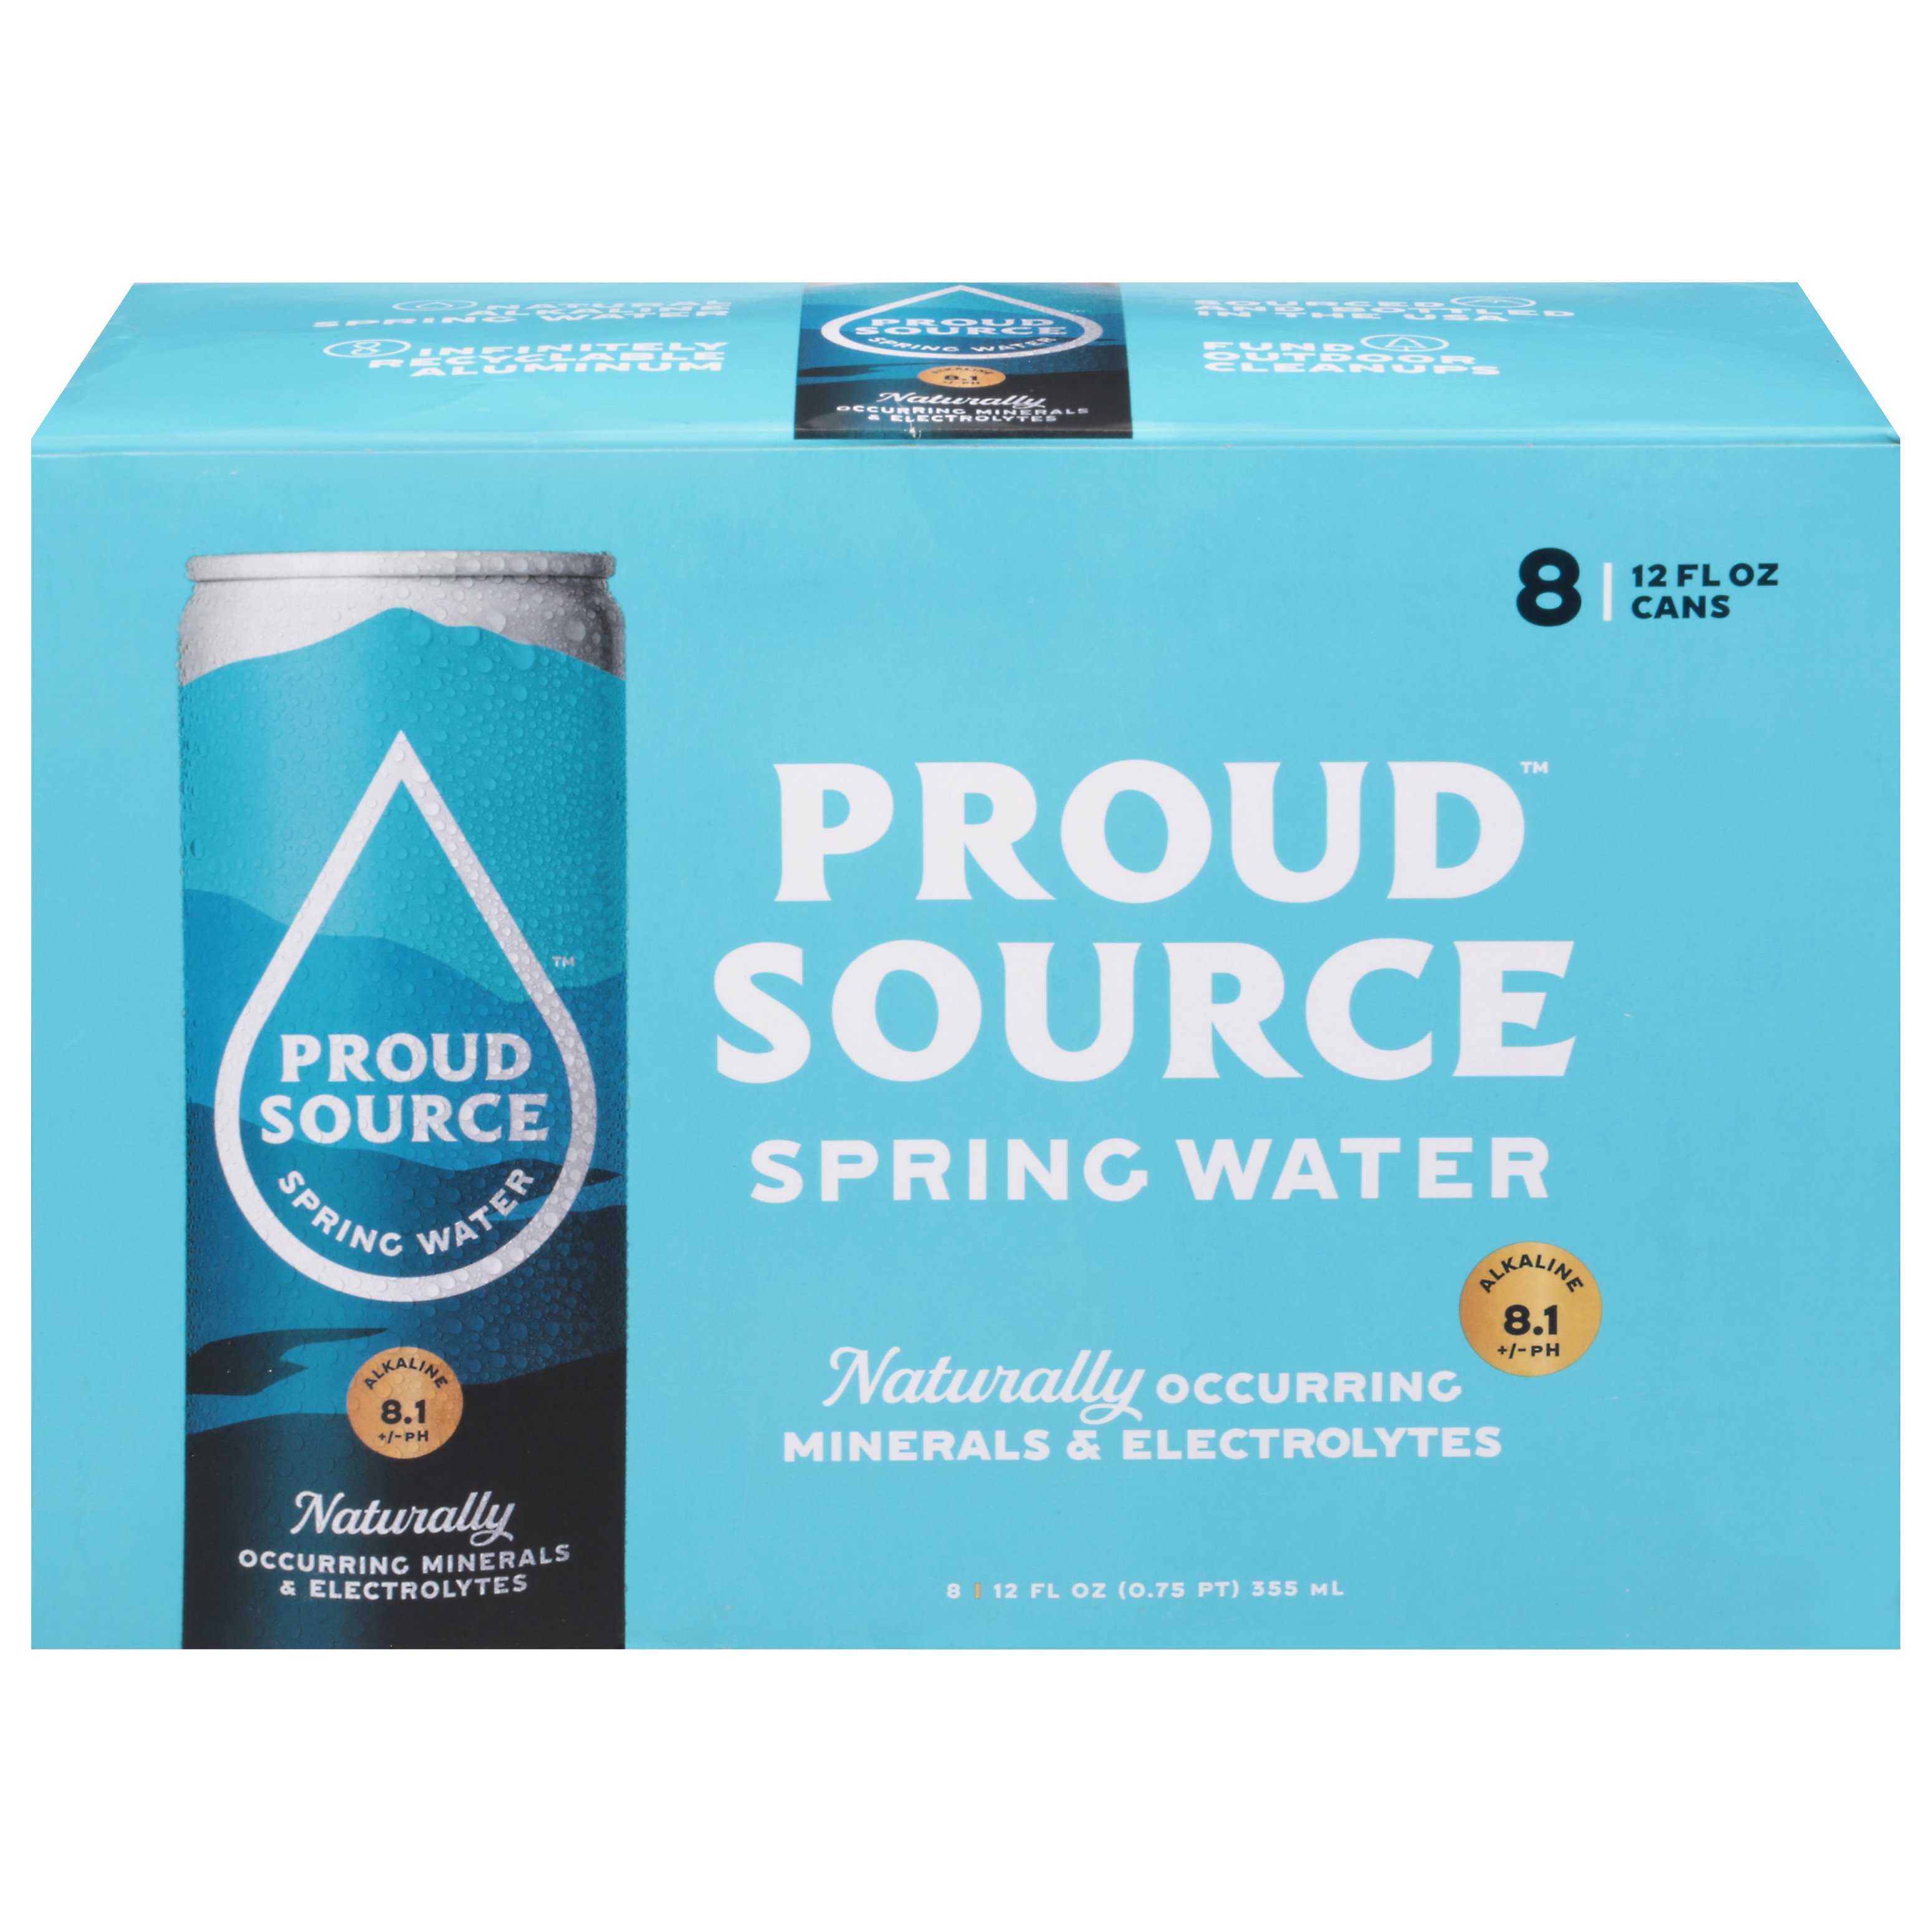 Ozarka 100% Natural Spring Water 8 oz Bottles - Shop Water at H-E-B